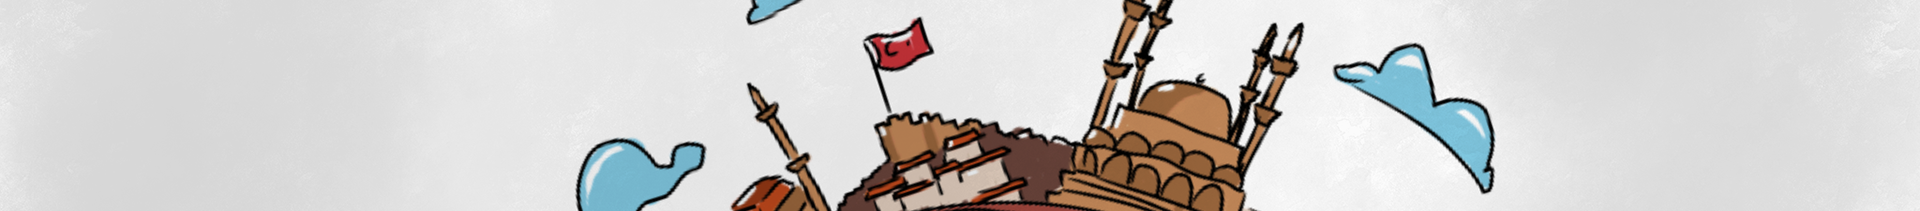 Mehmet Tanrıkulu's profile banner